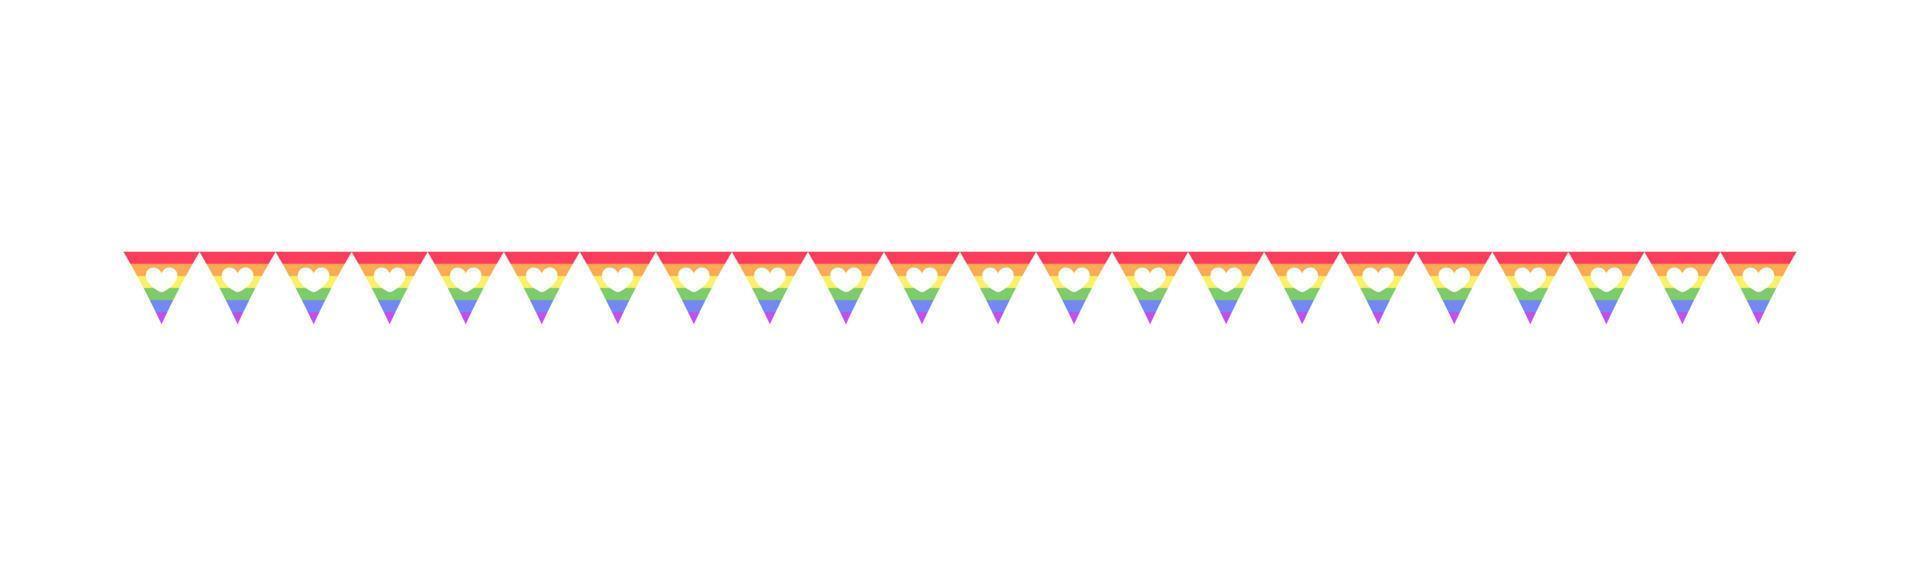 arco iris bandera con corazones separador. orgullo mes divisor sencillo vector ilustración clipart